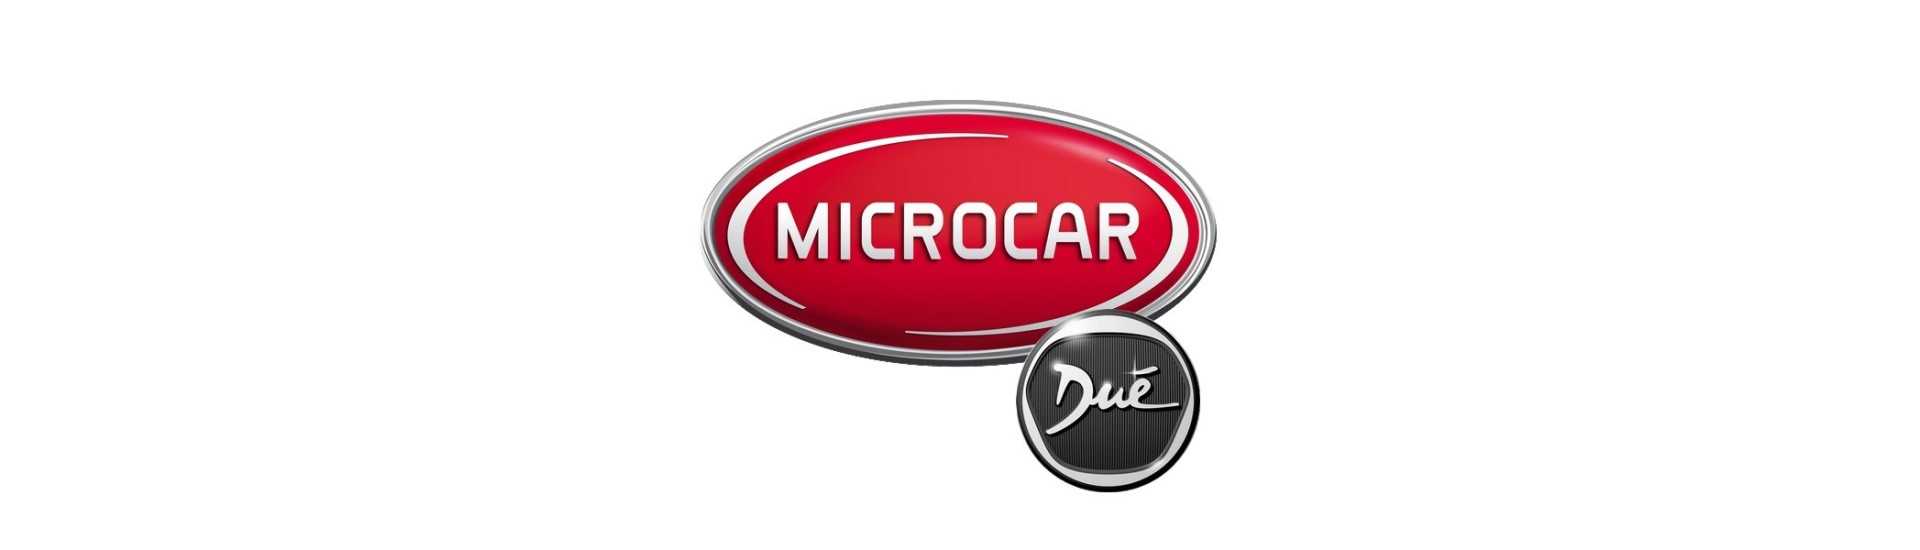 Paras auton huolto ilman lupaa Microcar Dué